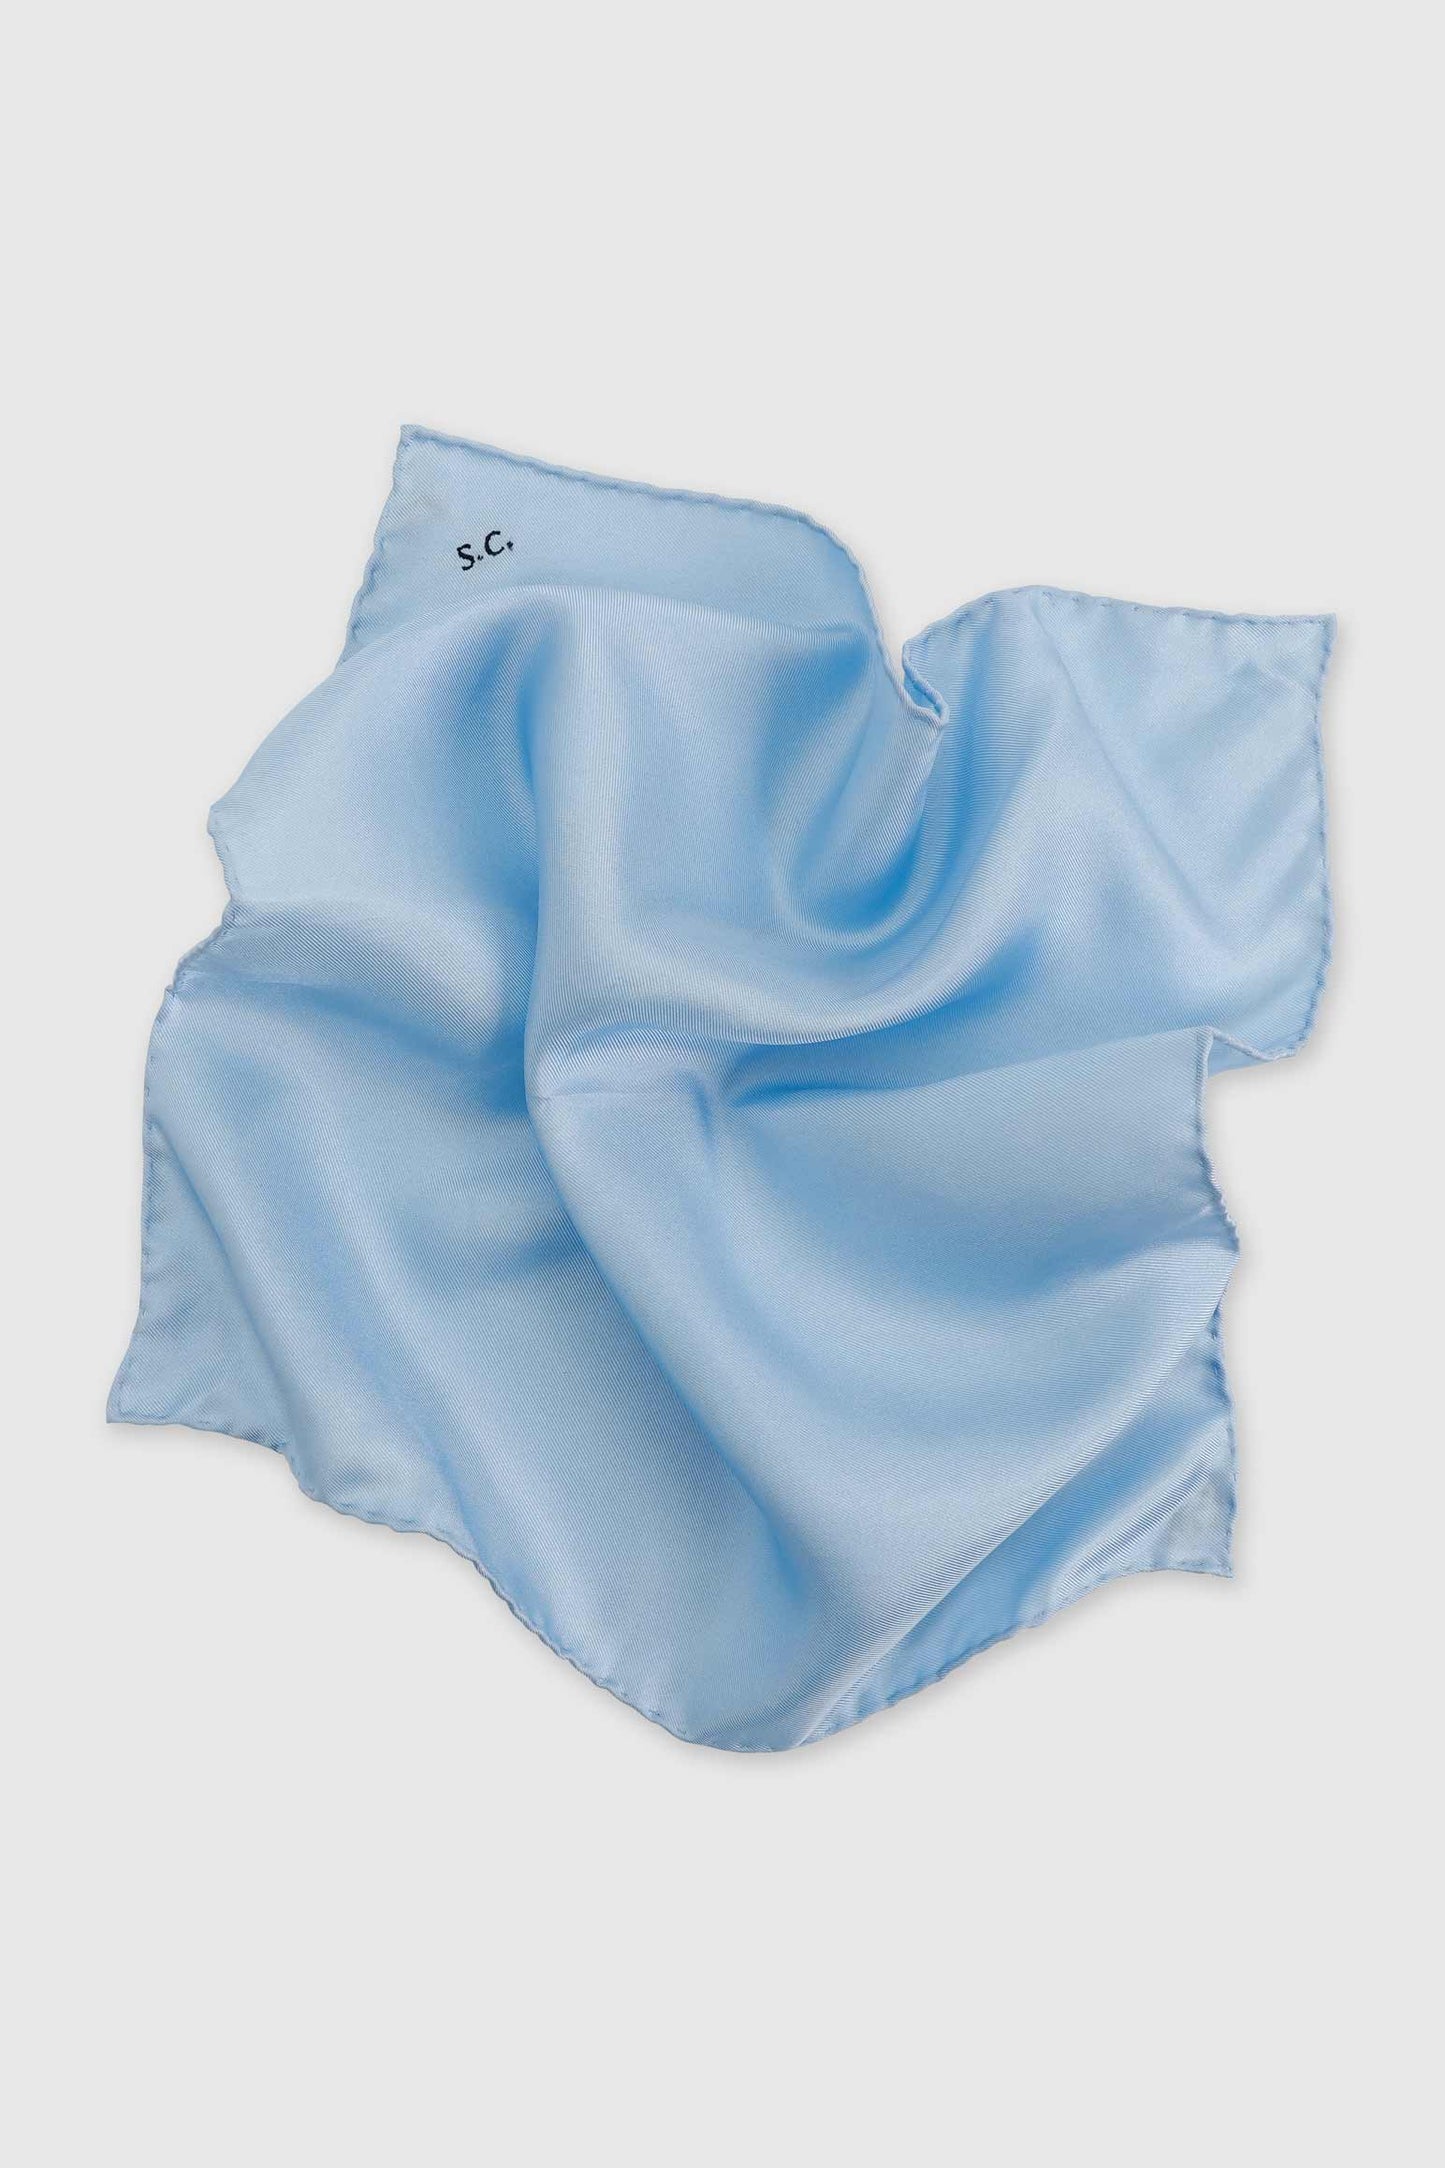 Pochette de costume faite main 100% soie bleu clair